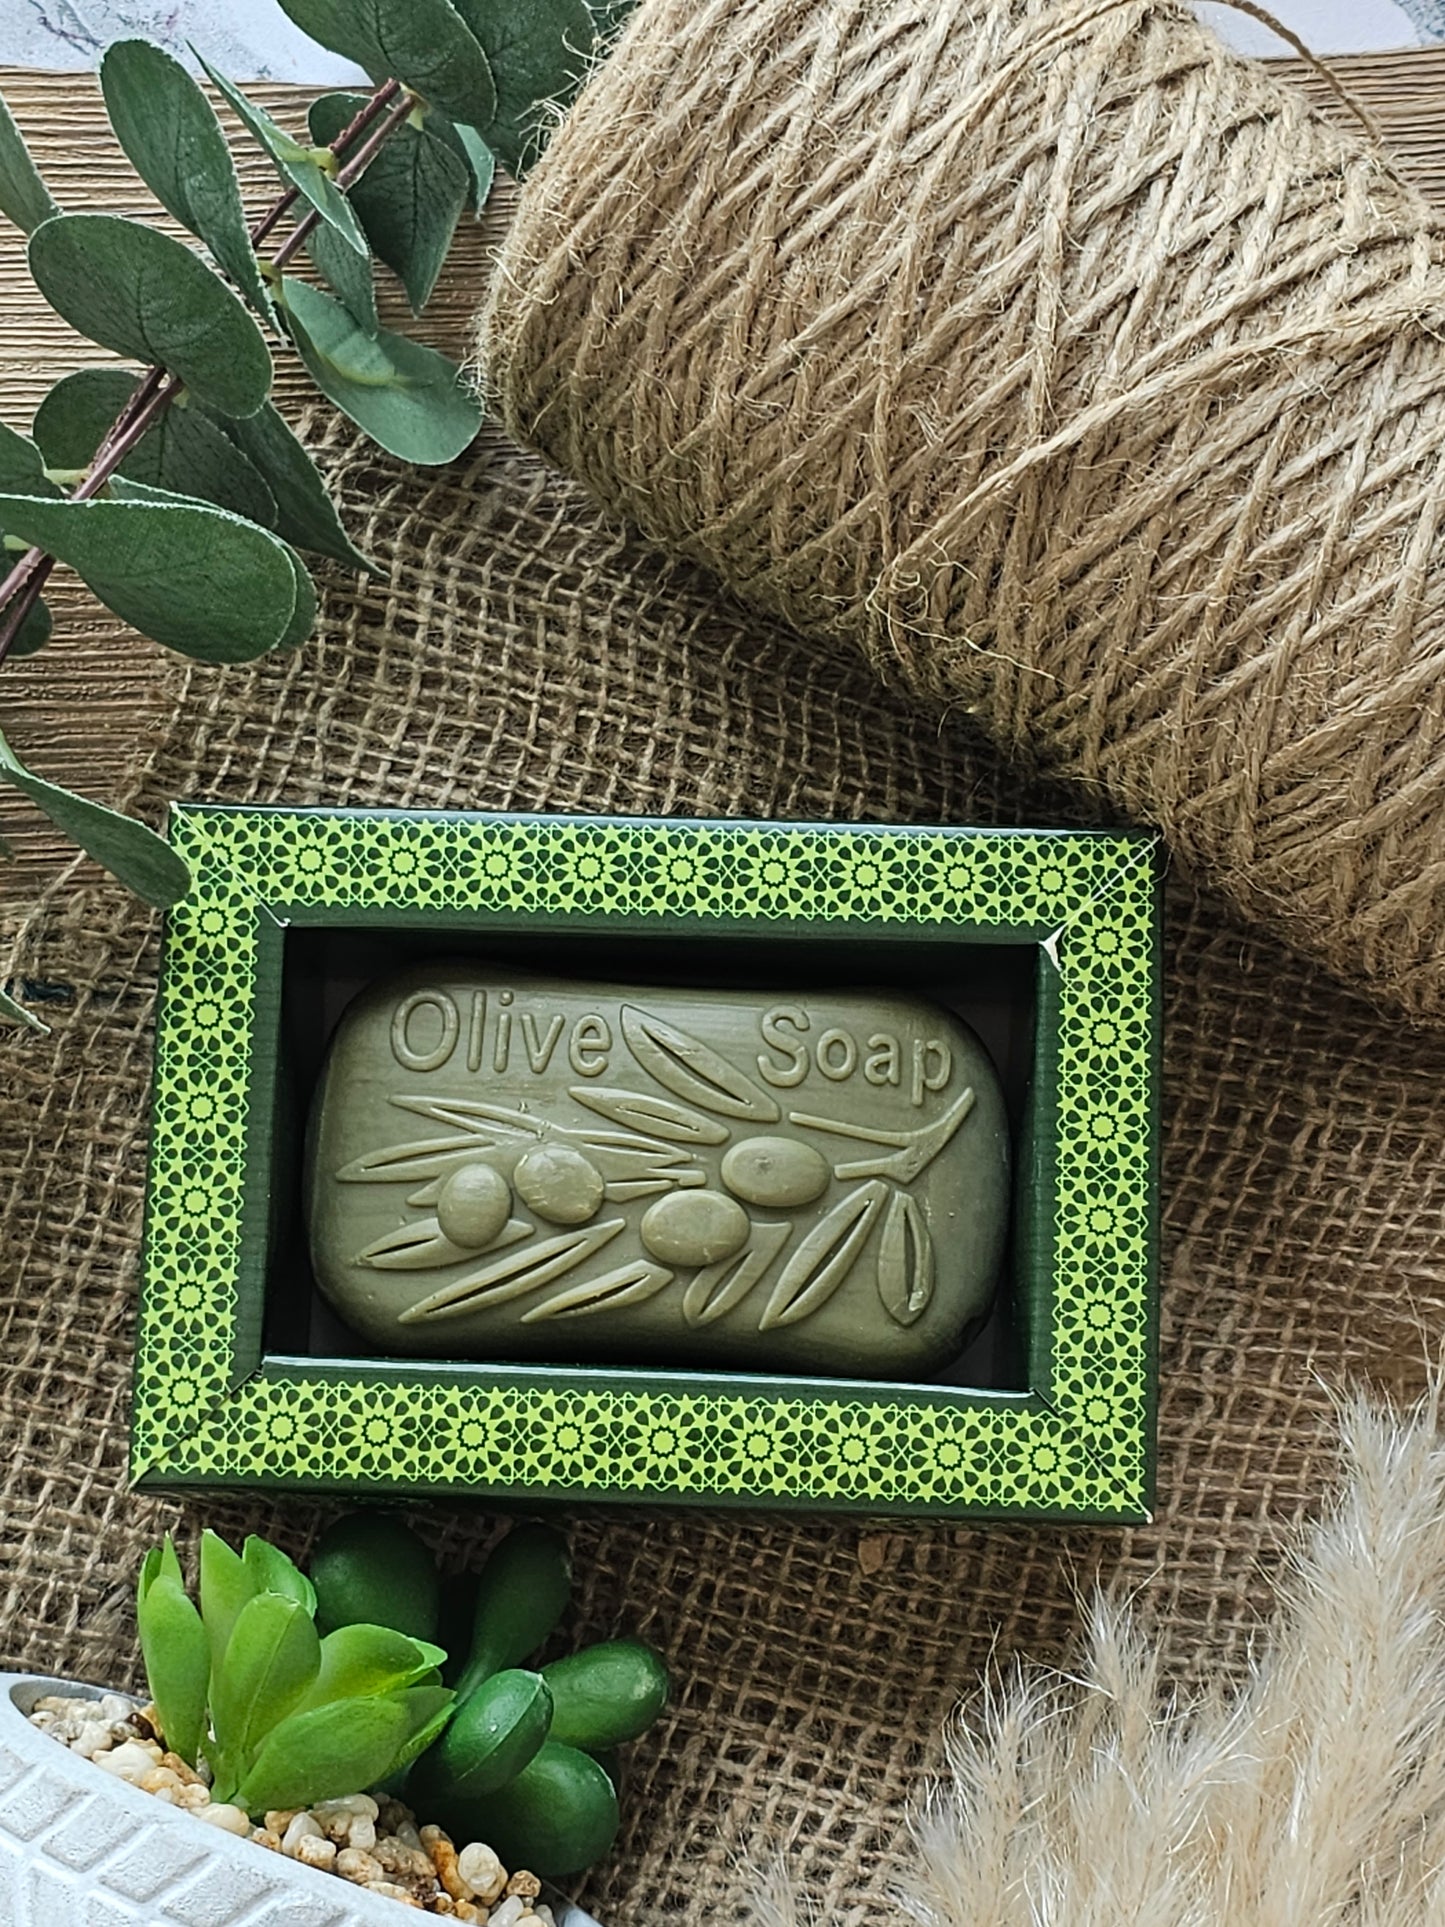 Virgin Olive Soap